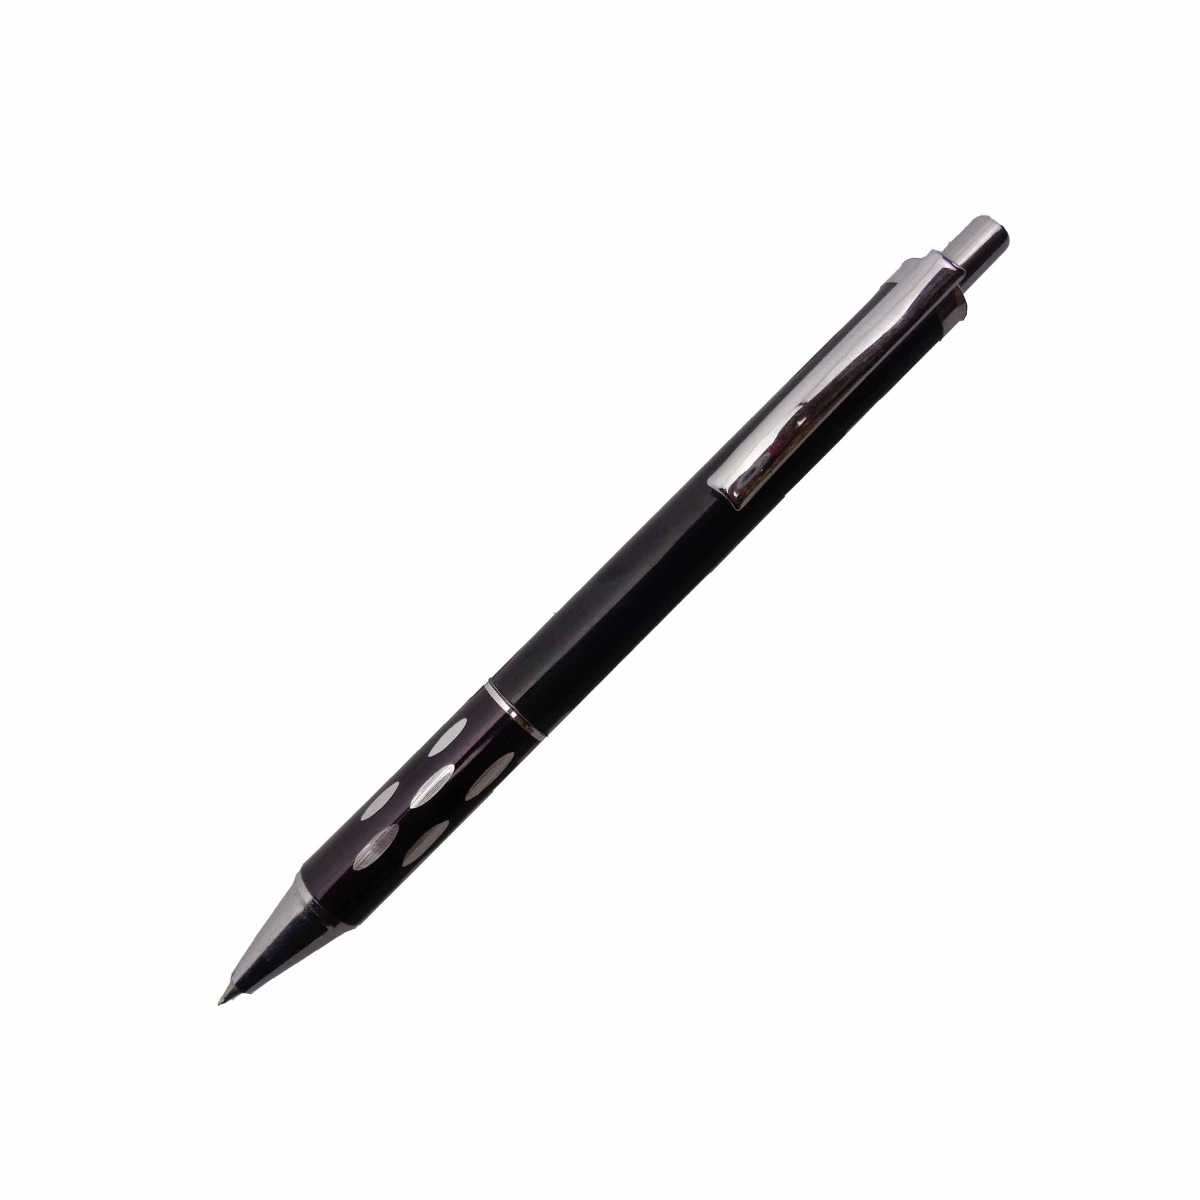 Penhouse.in Model: 15330 Black color body with silver color clip fine tip retractable pen